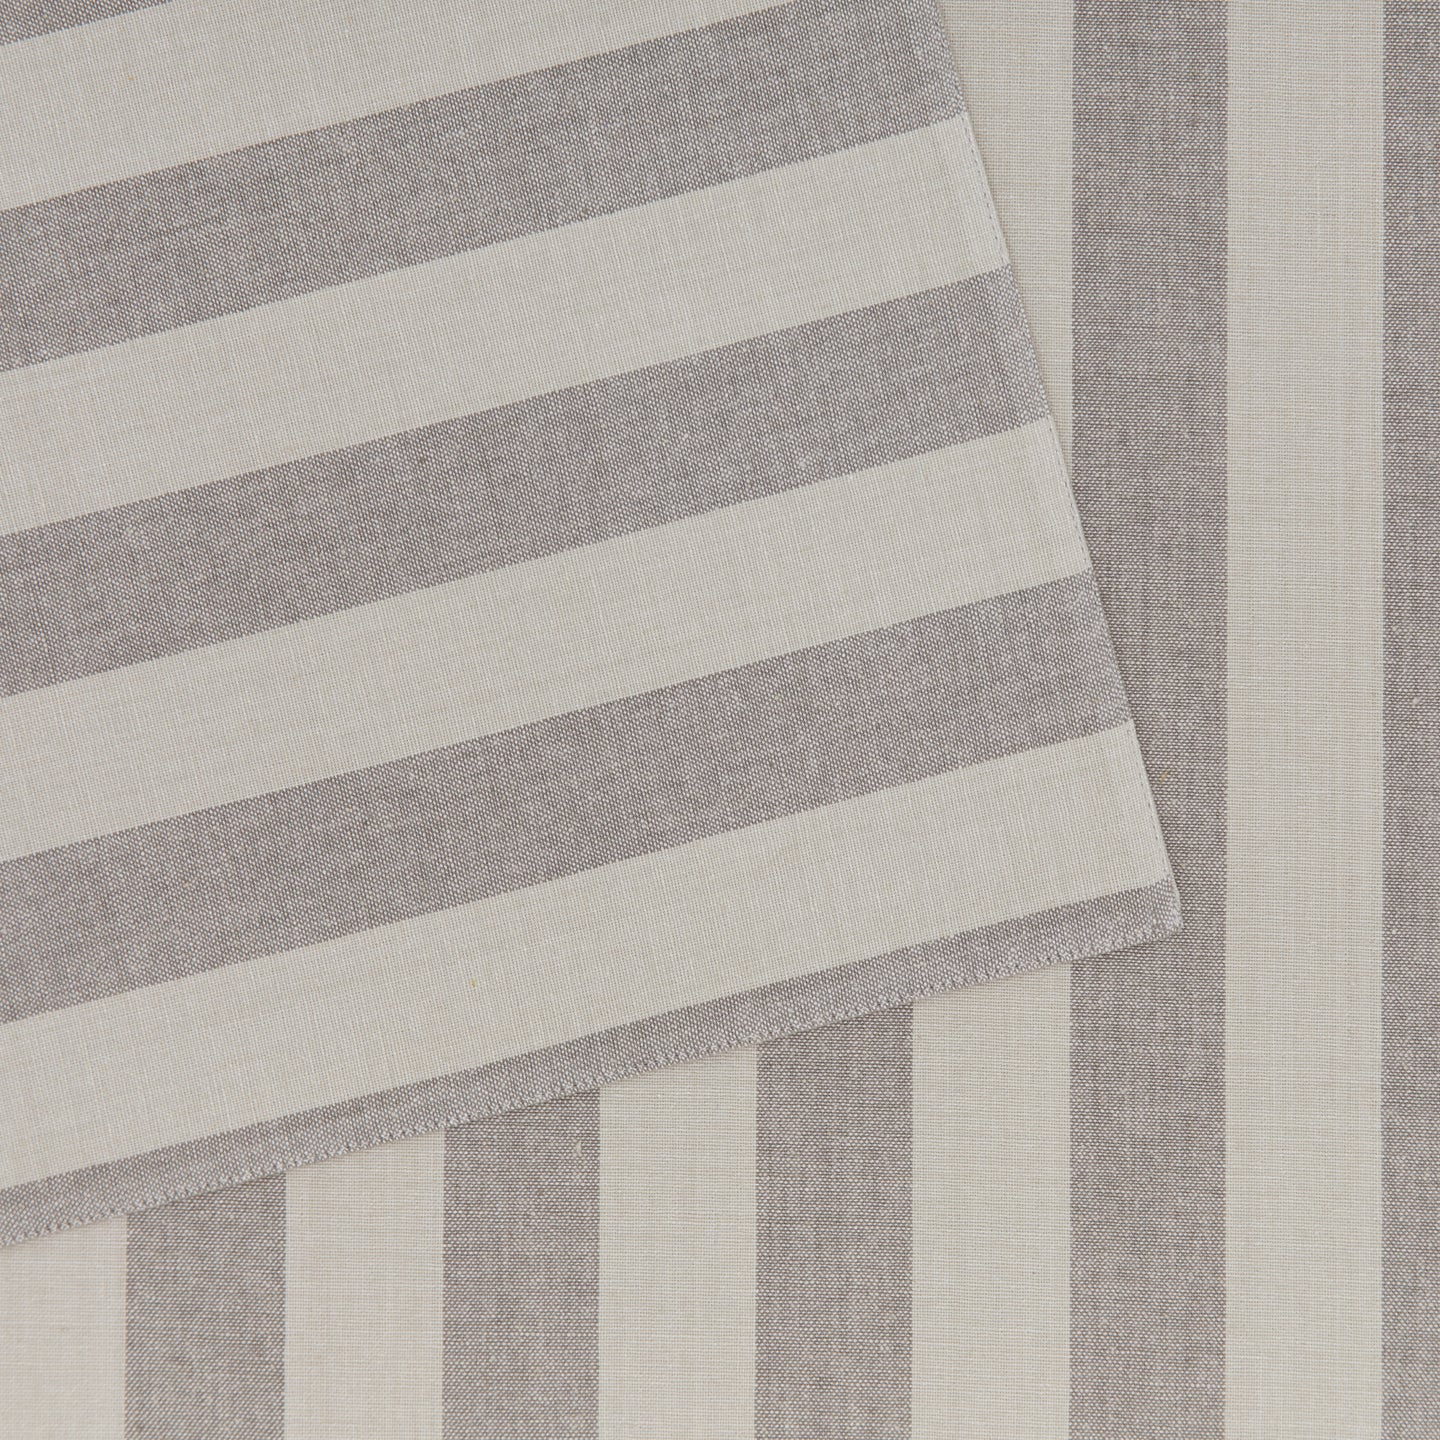 Essential Striped Placemat, Set of 4 - Light Grey/Dark Grey